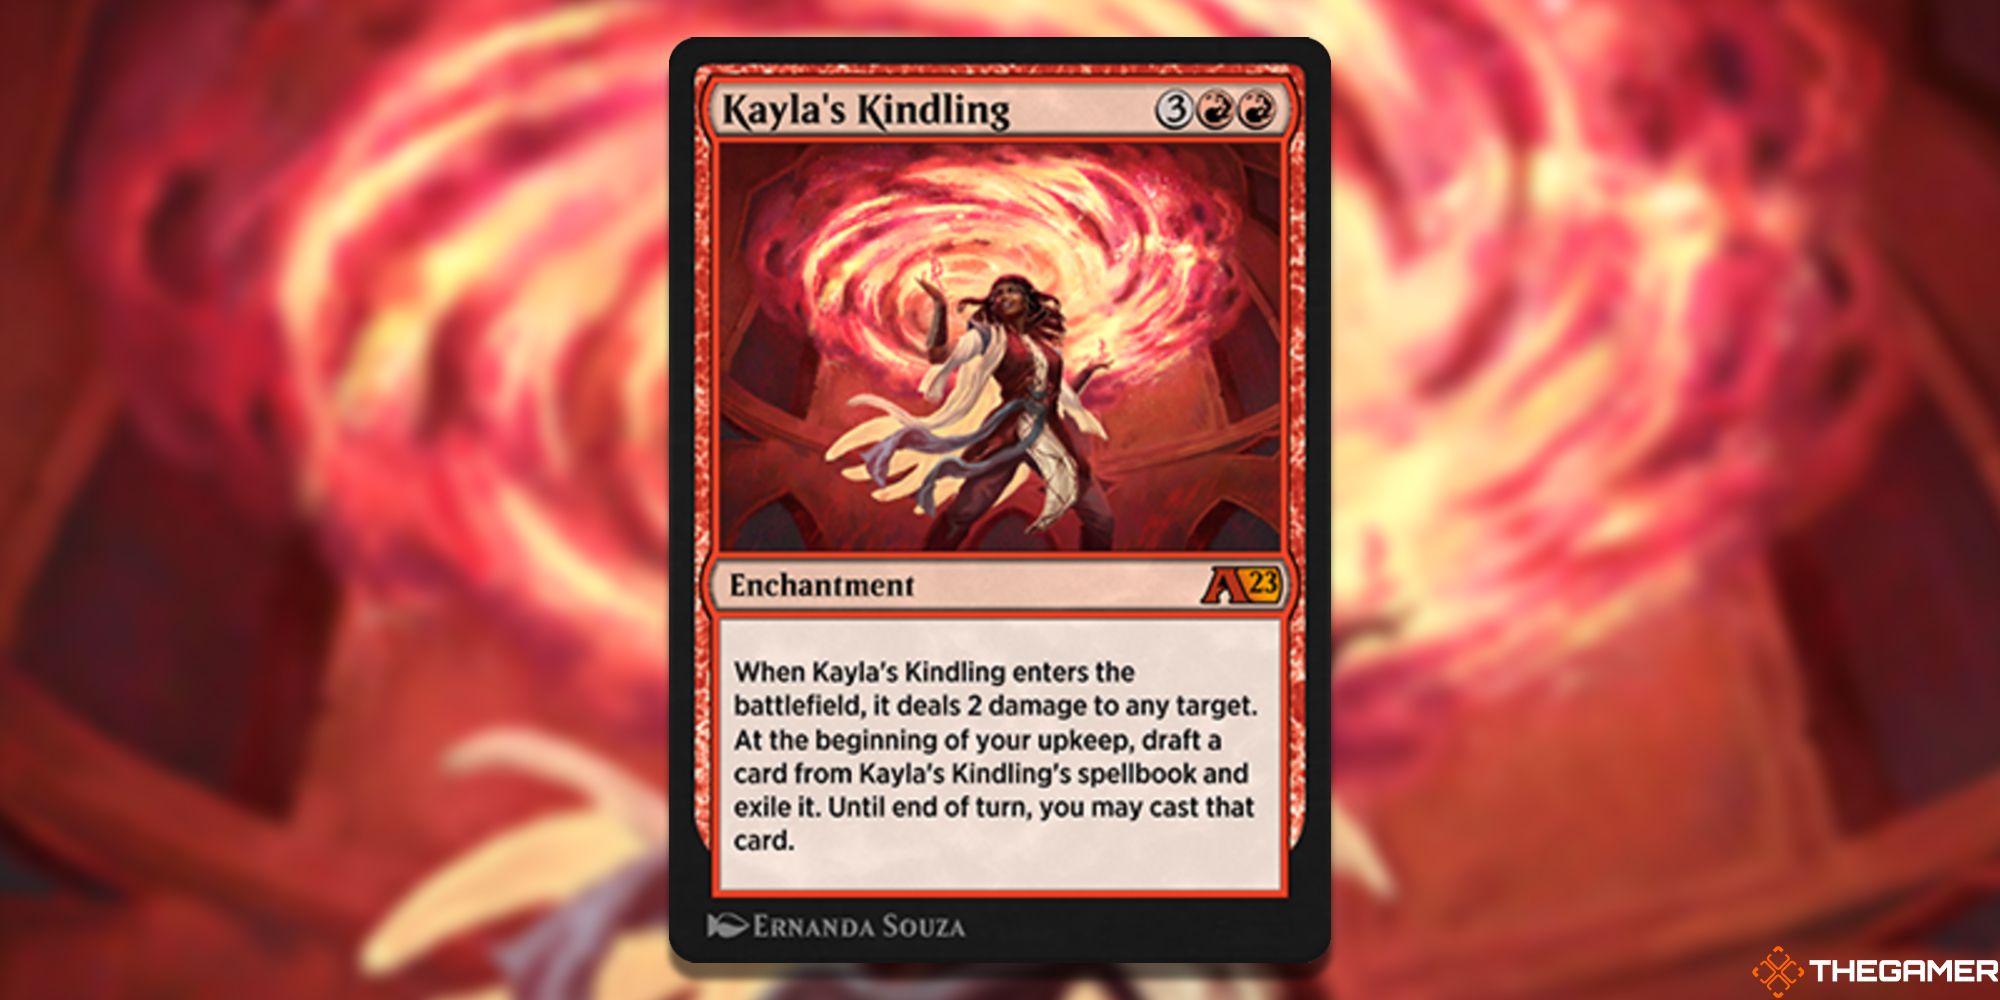  Kaylas Kindling